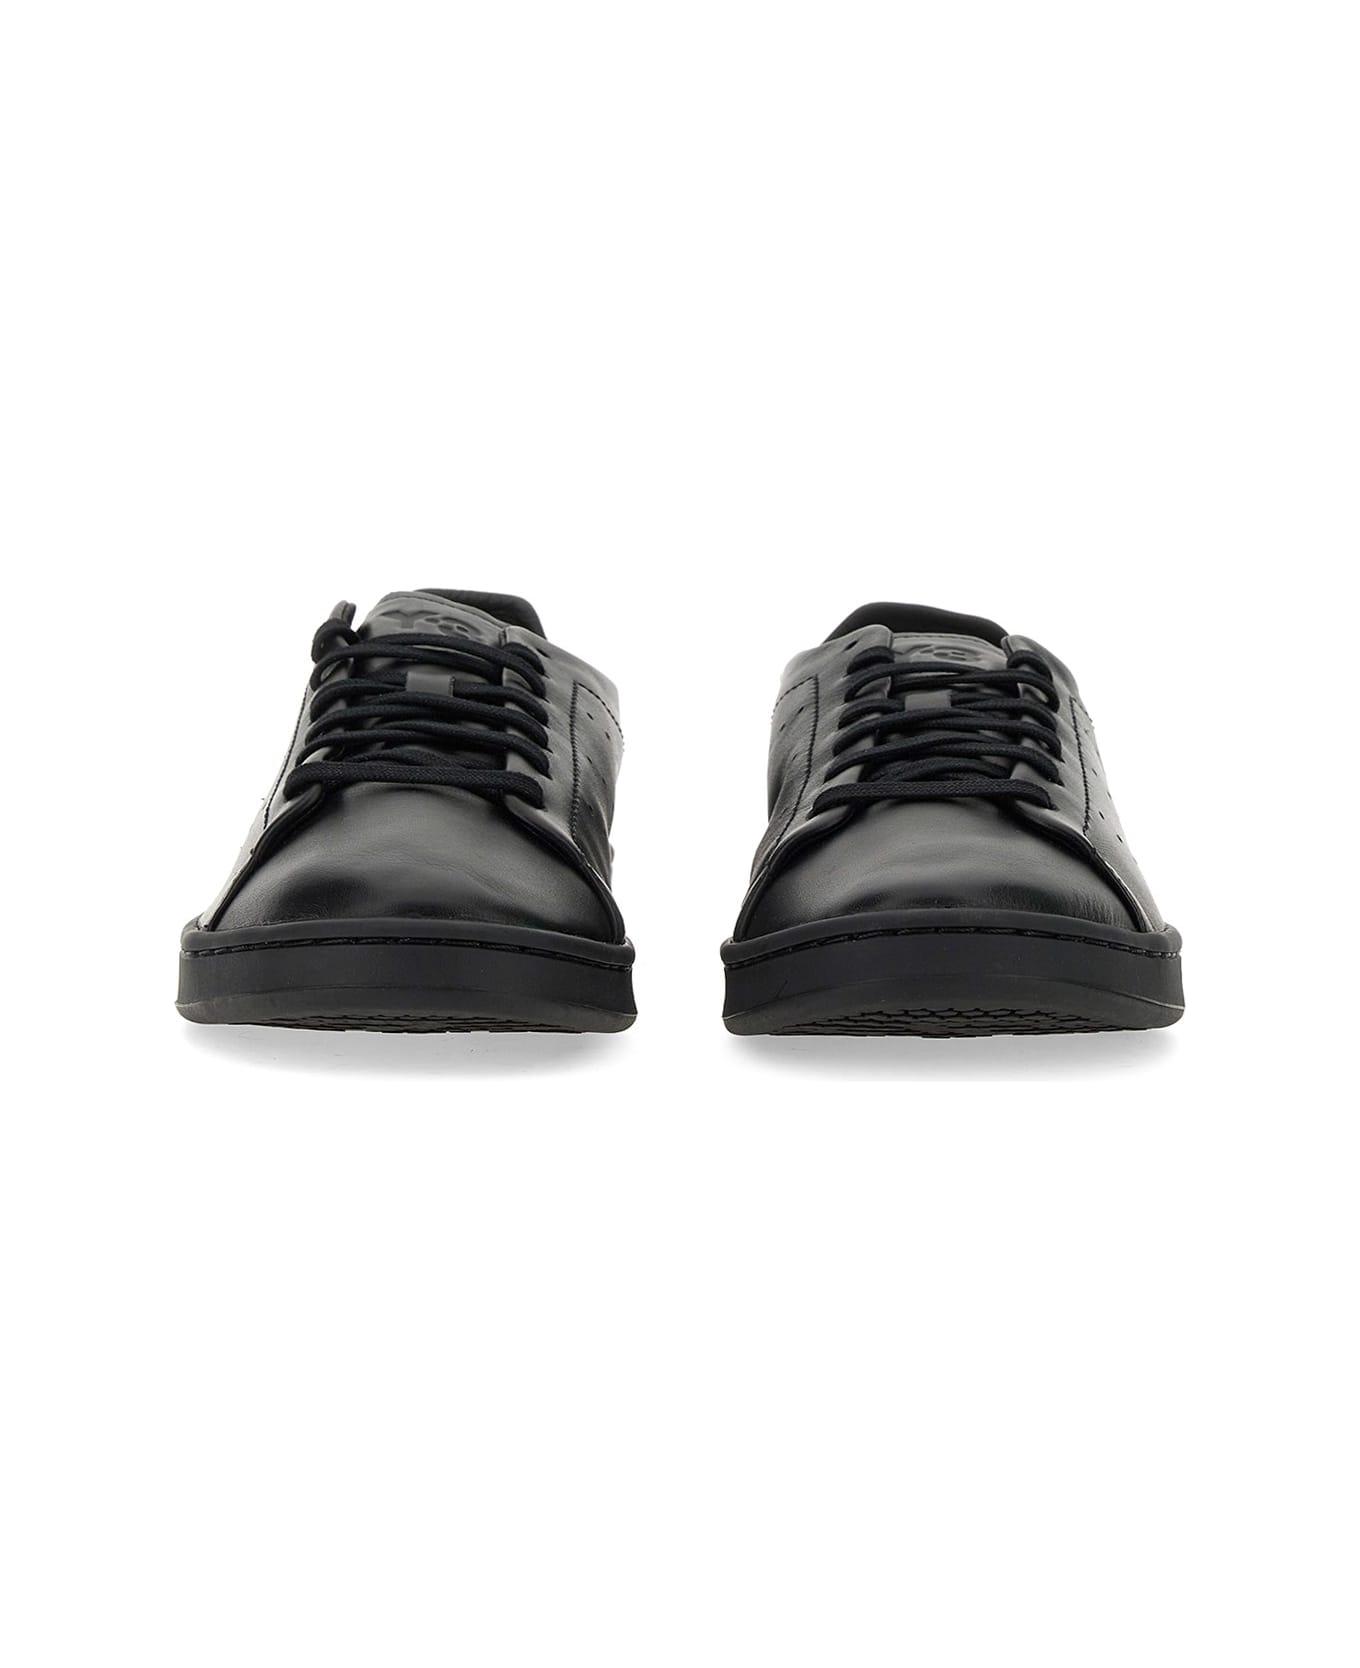 Y-3 Stan Smith Sneaker - Black